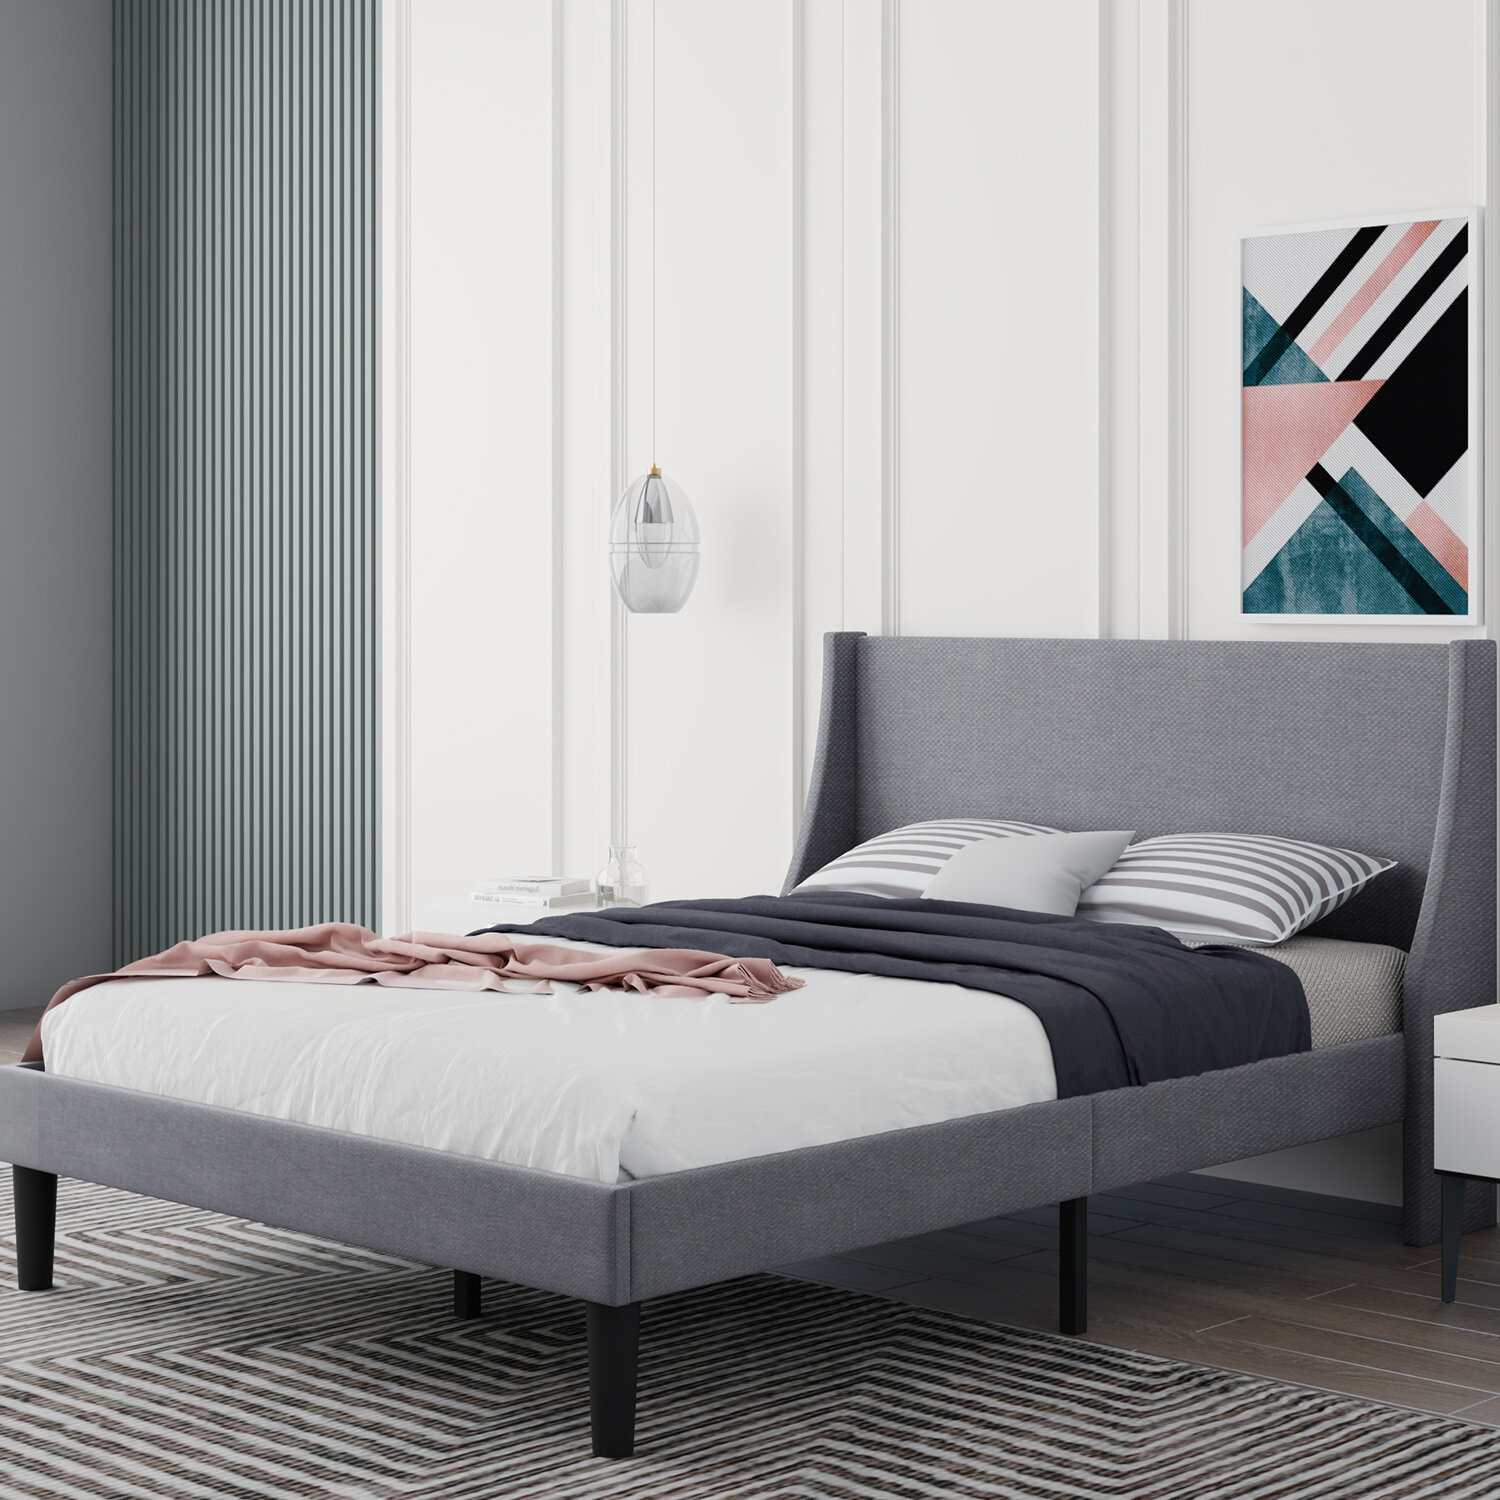 Fairmont Park Cristiano Upholstered Bed Frame & Reviews | Wayfair.co.uk